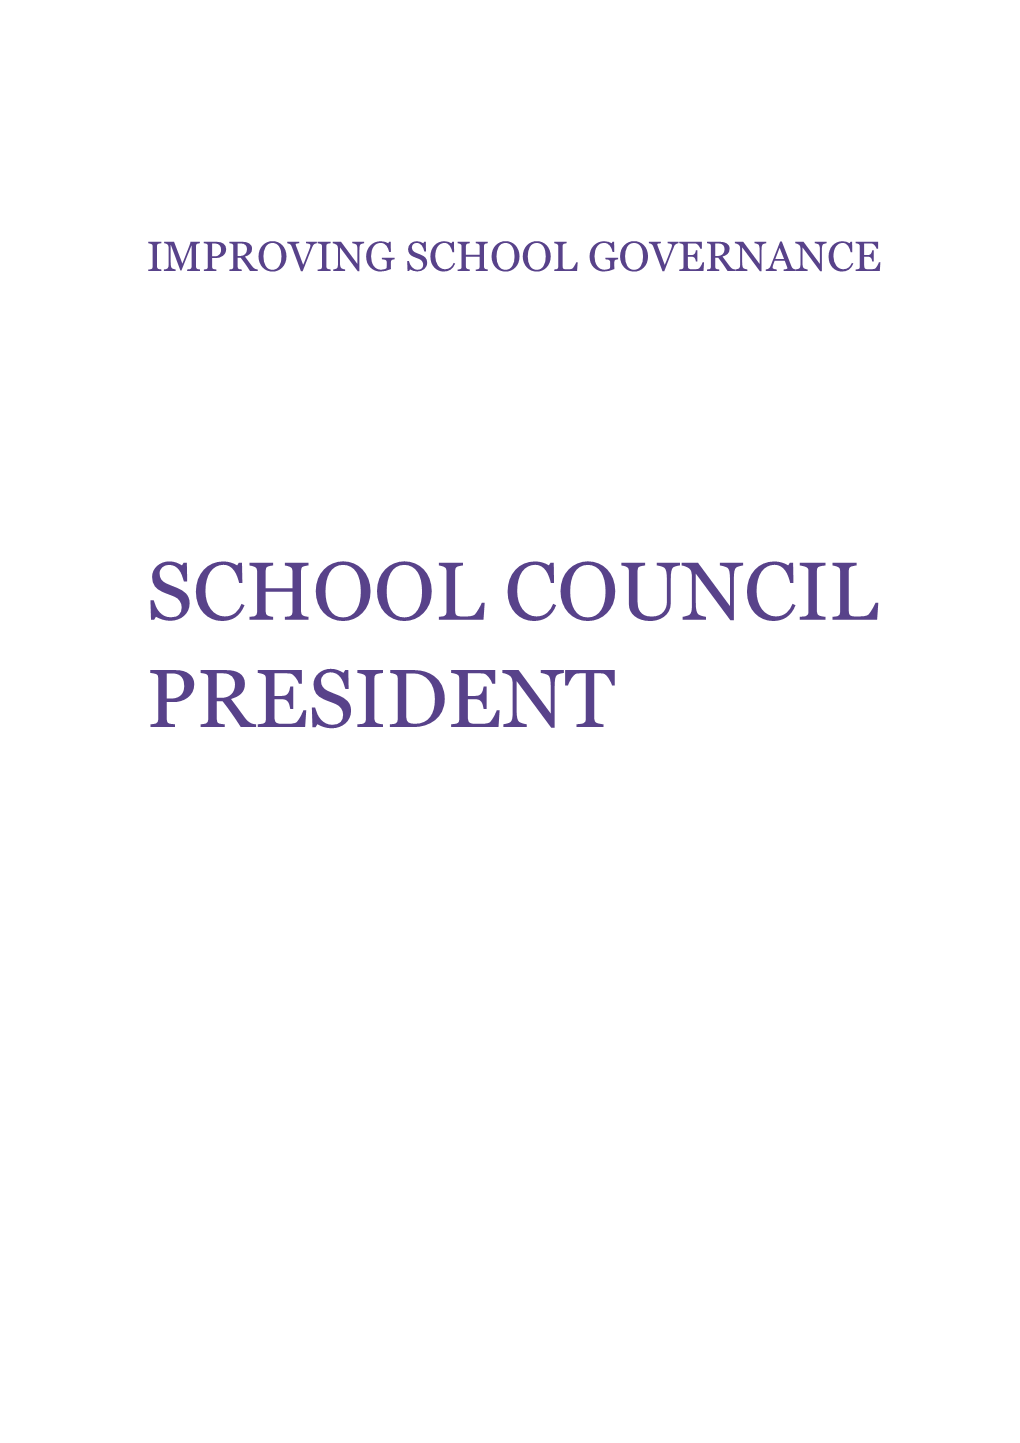 Improving School Governance School Council President